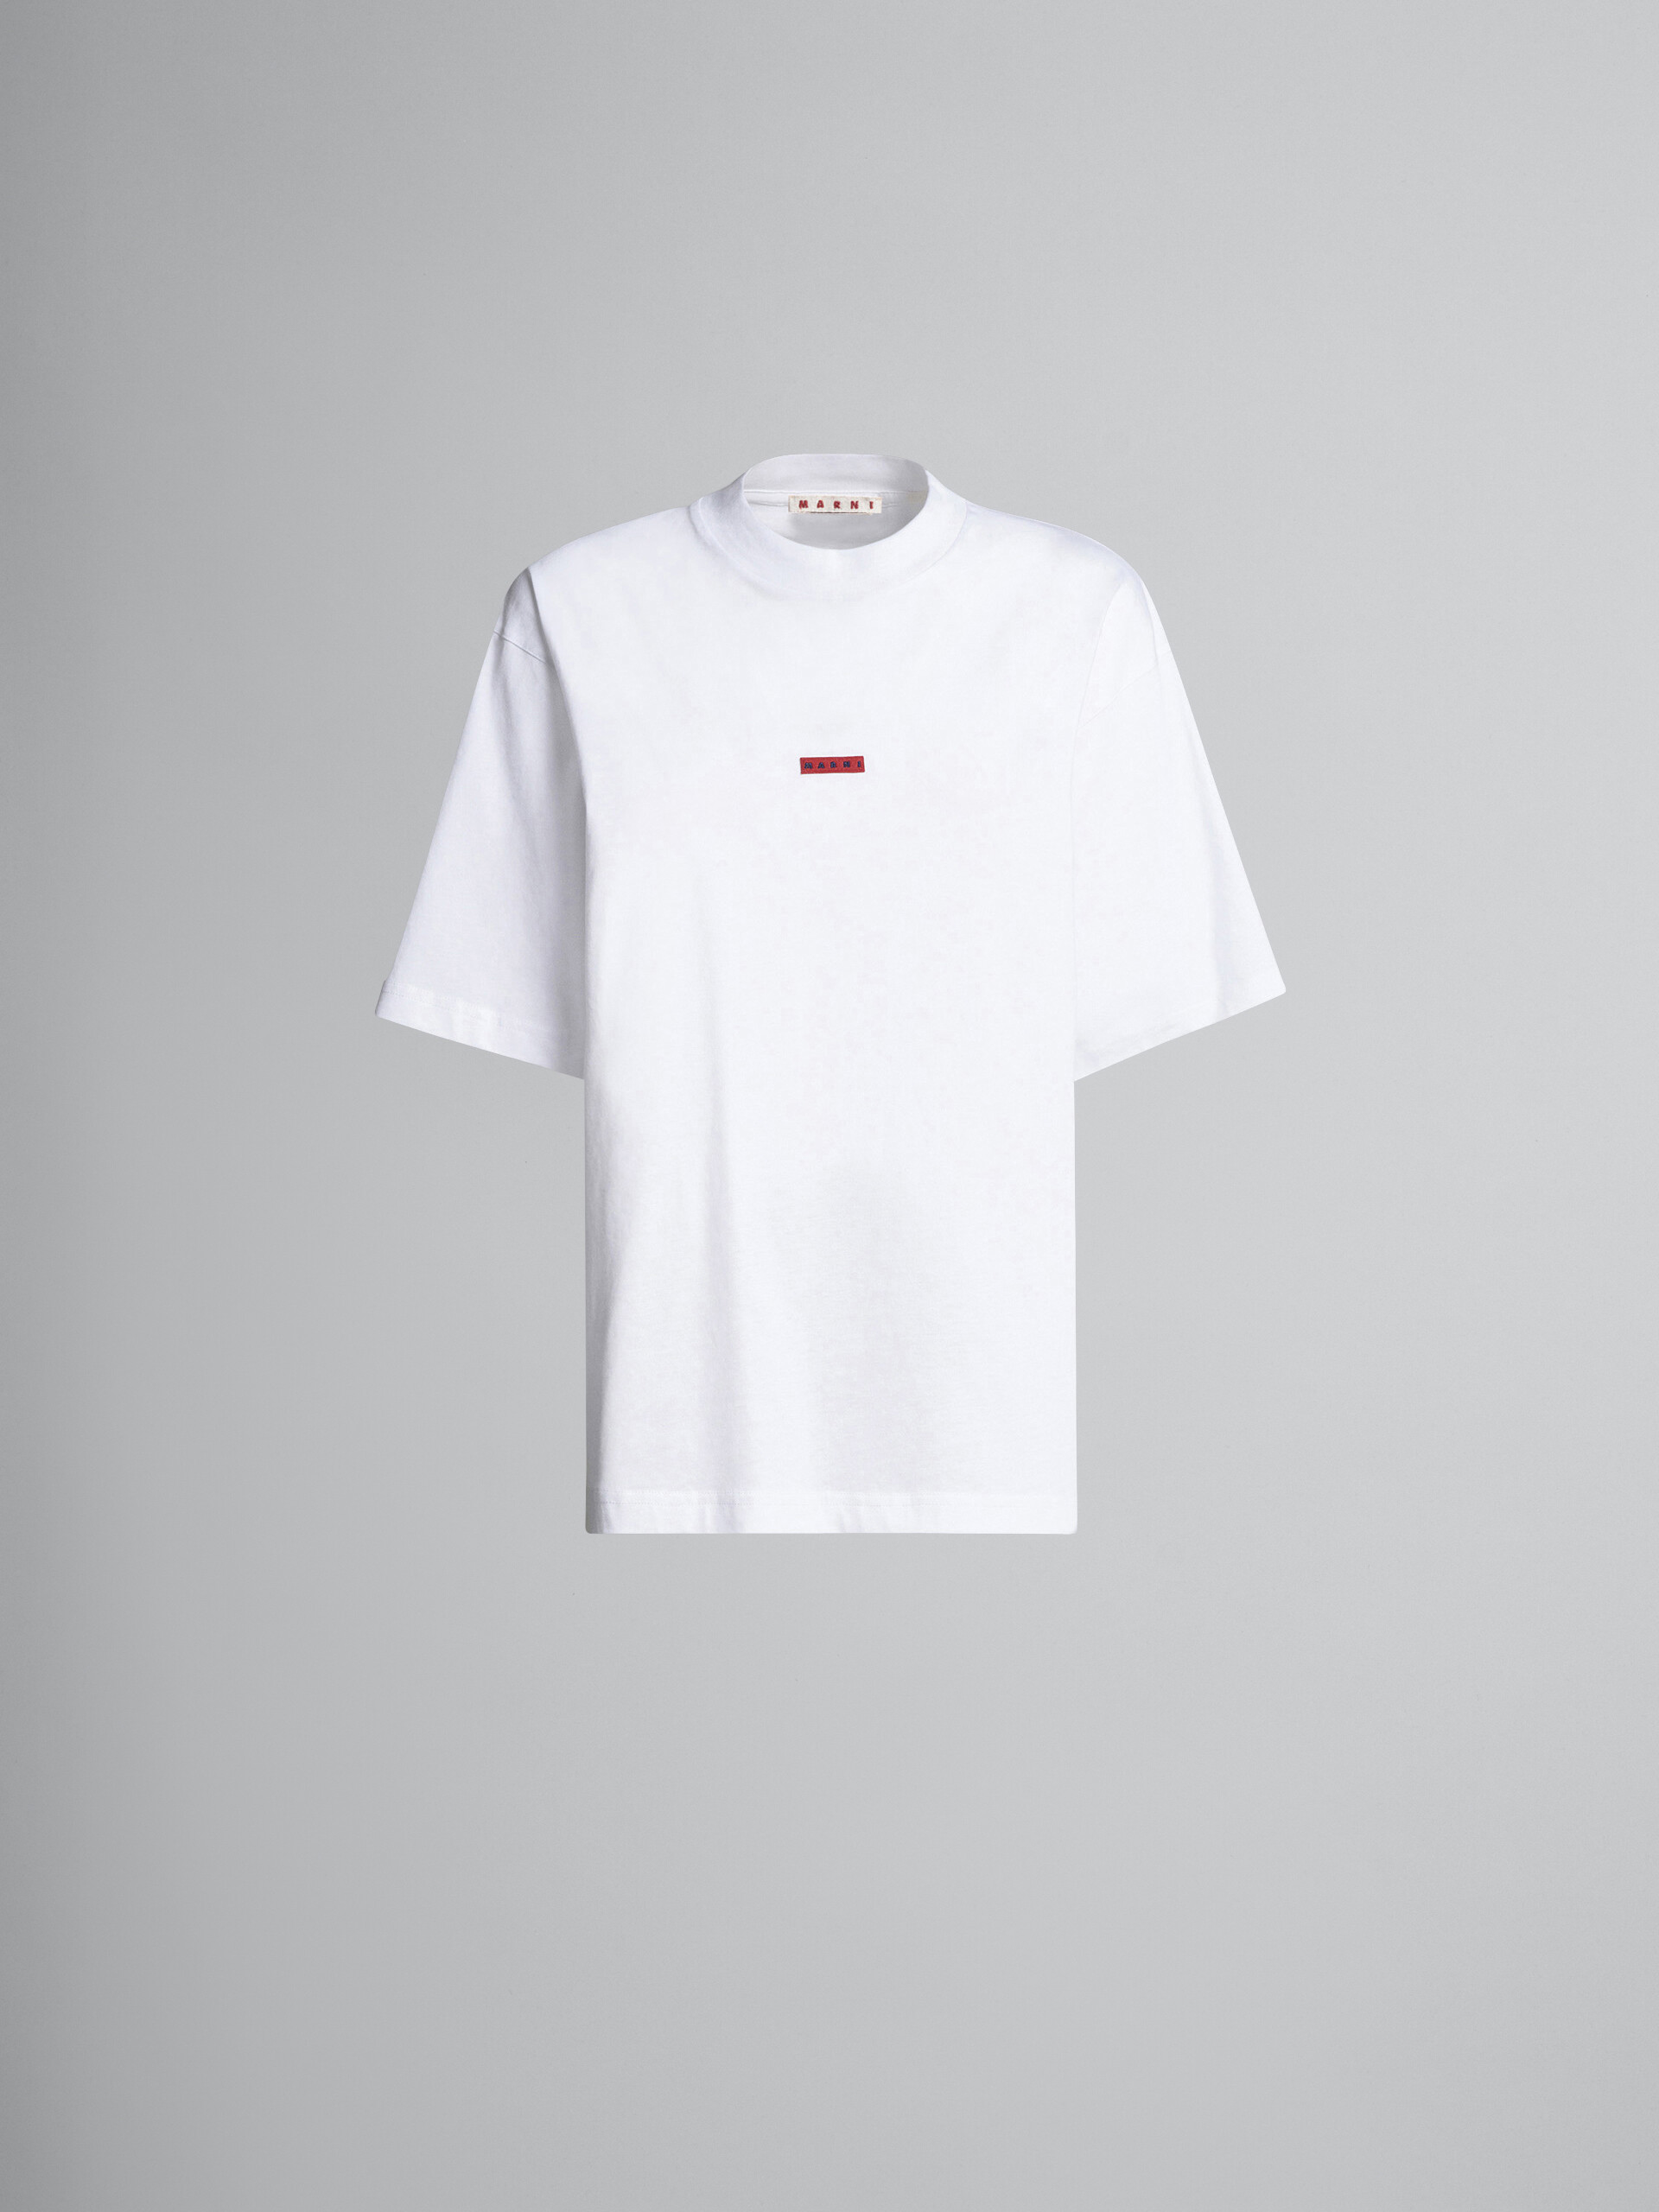 T-shirt en jersey de coton blanc avec logo - T-shirts - Image 1